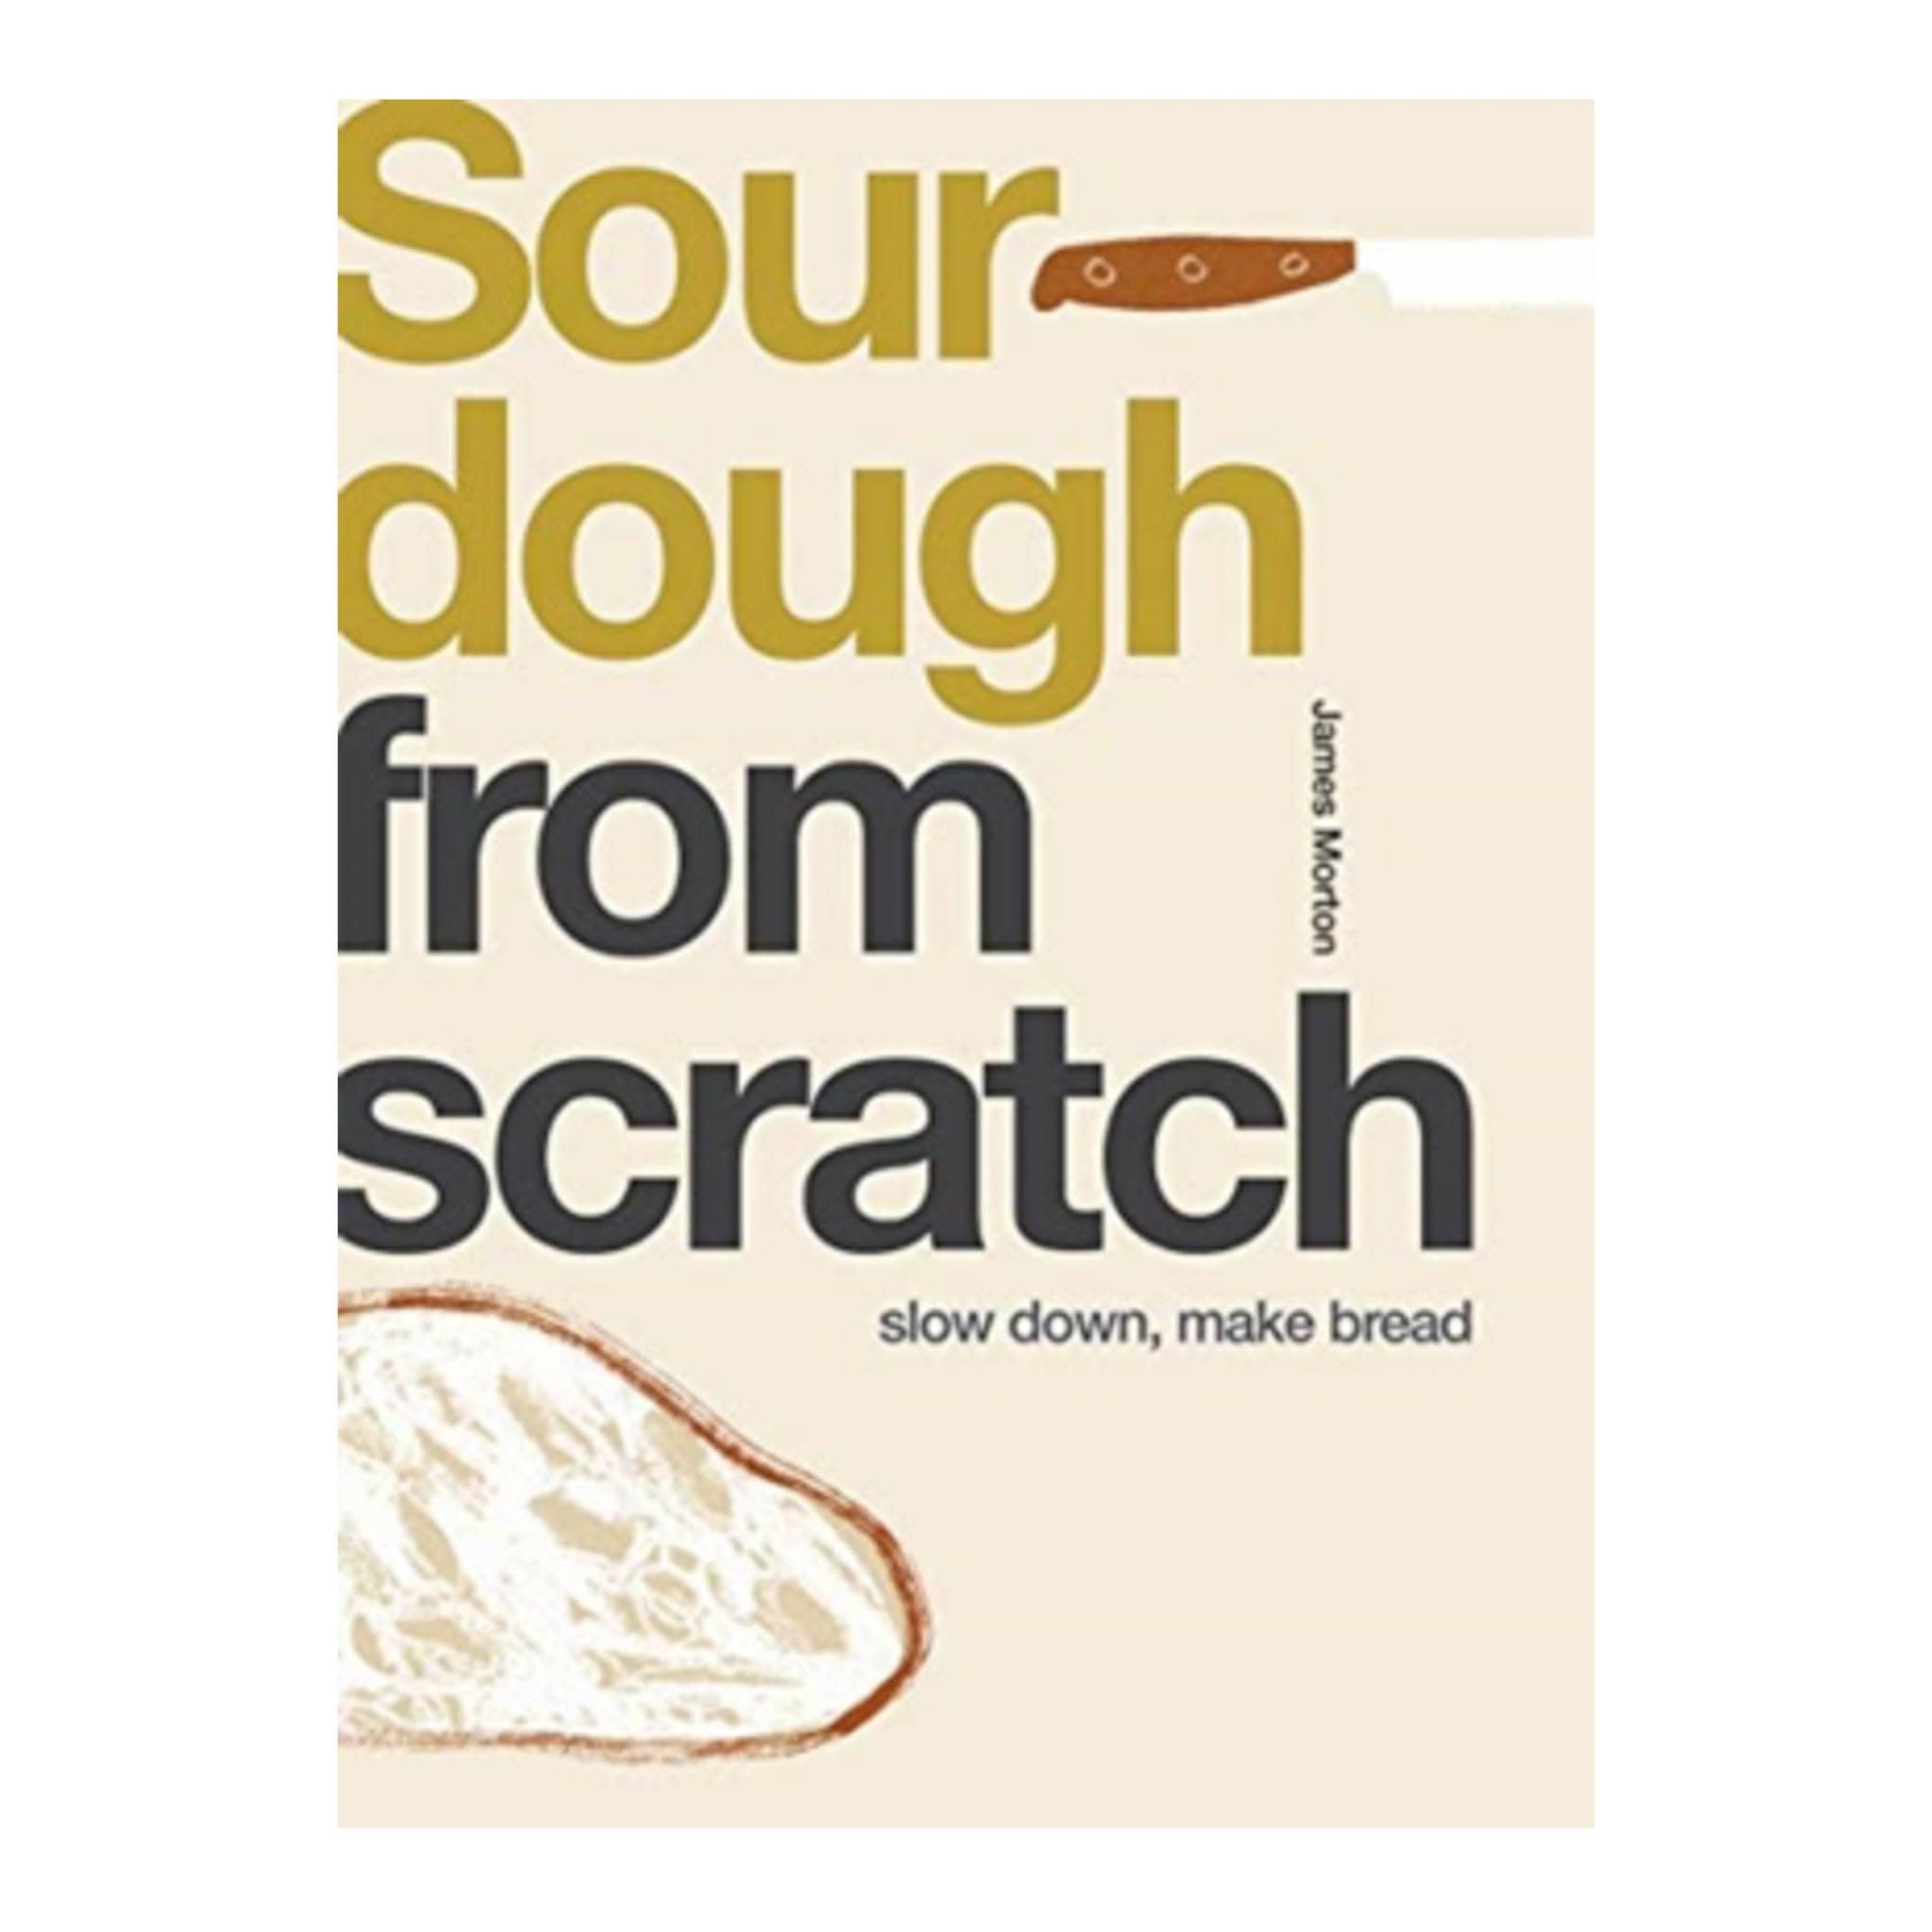 Sourdough from Scratch by James Morton